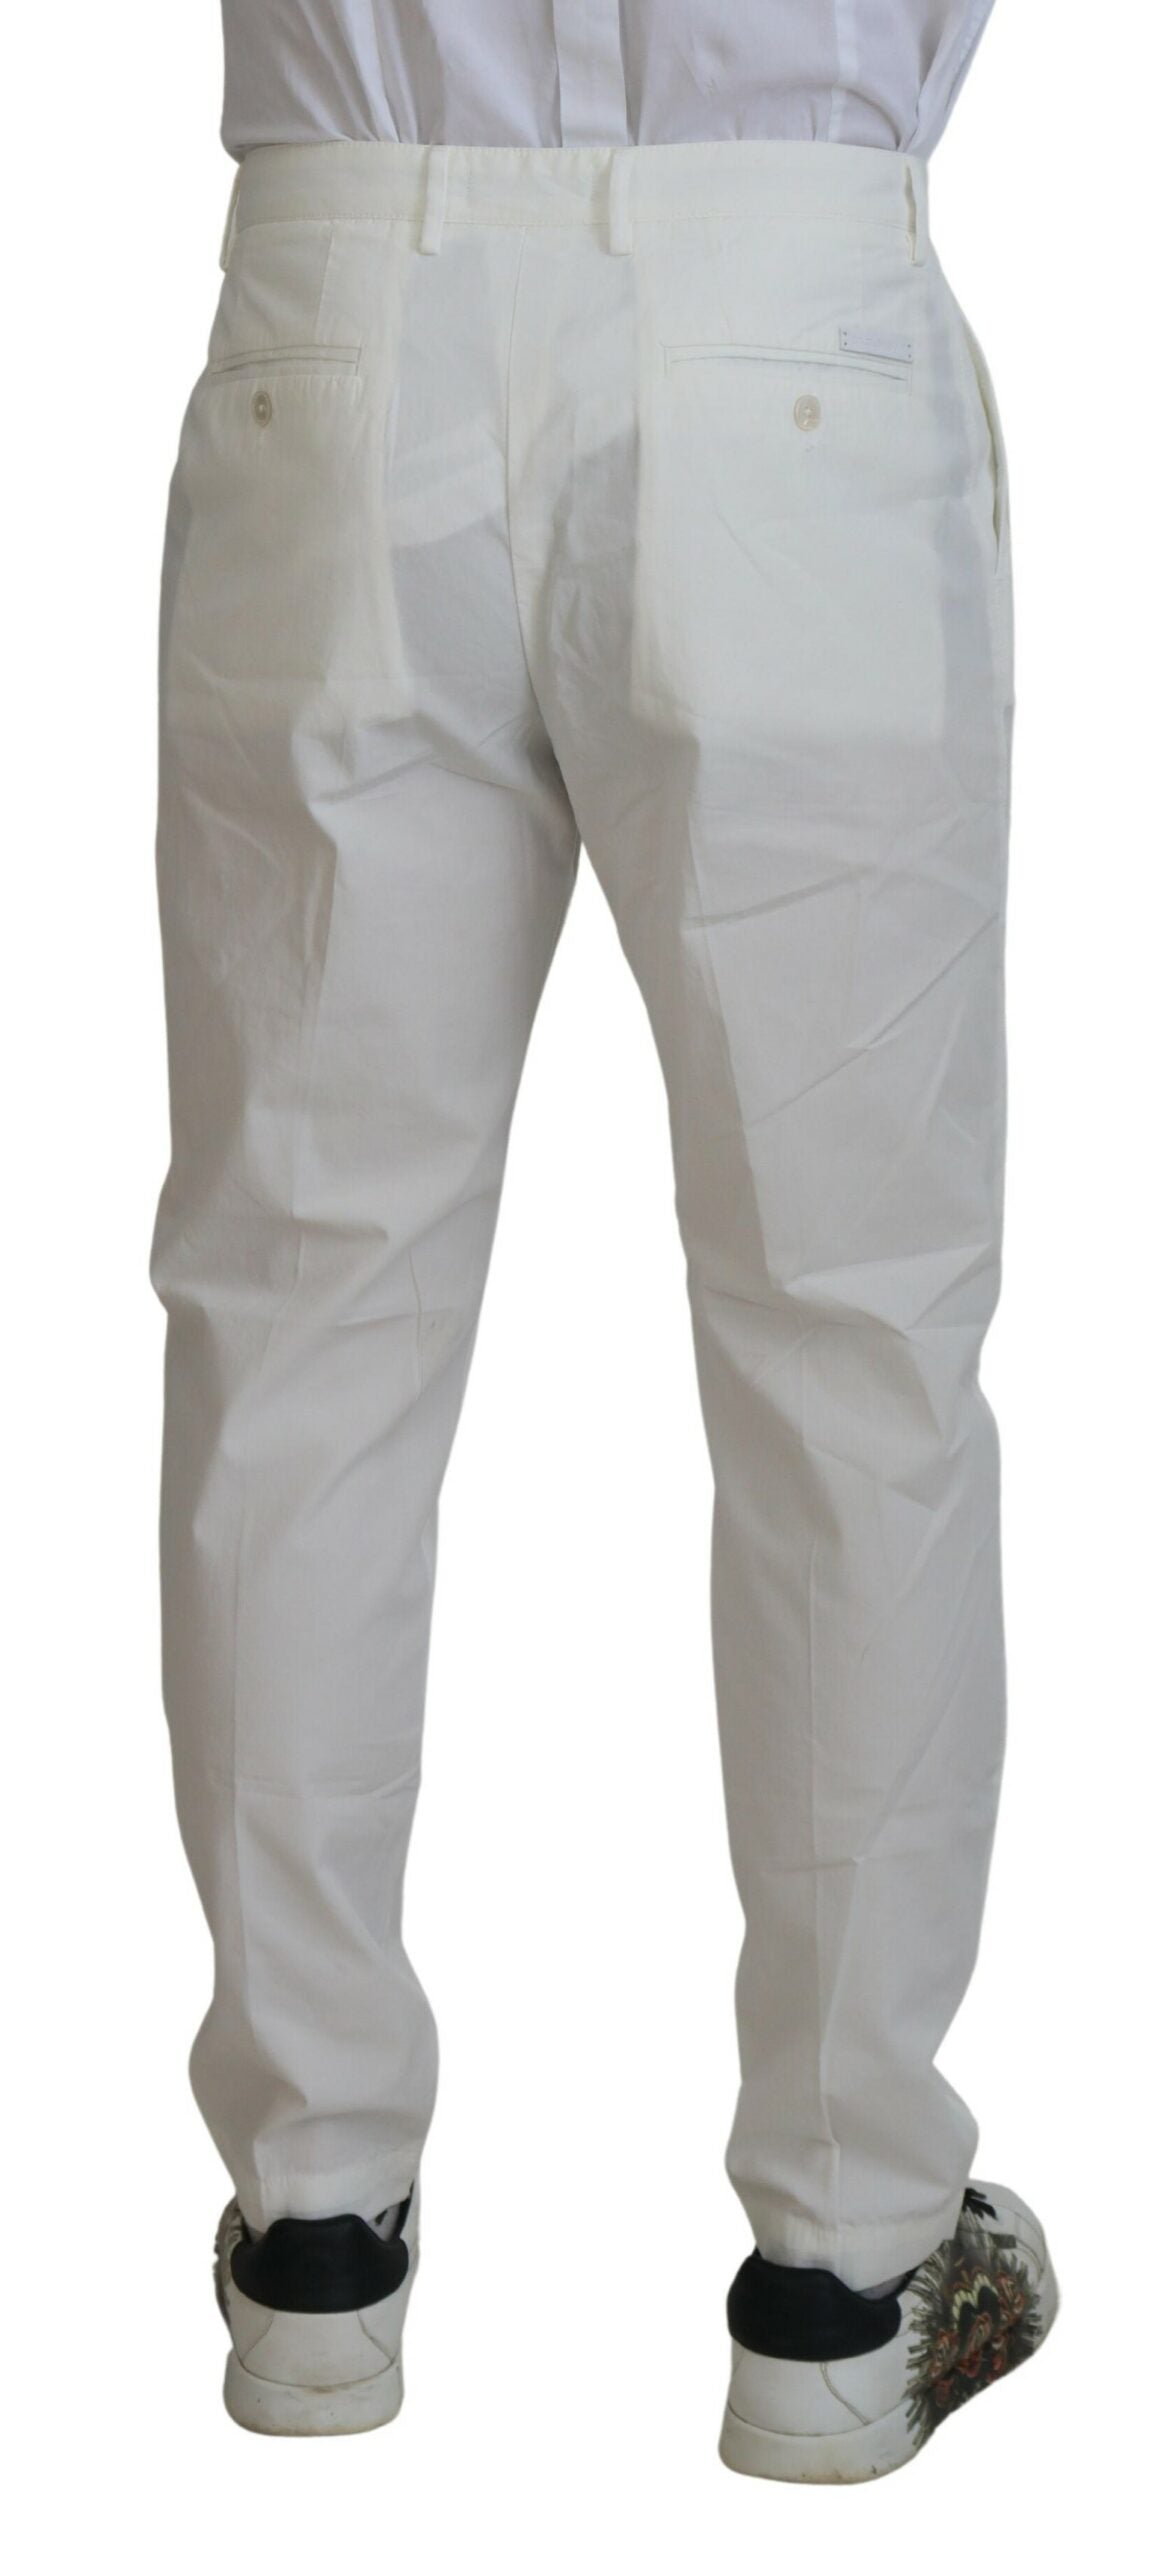 Elegant White Cotton Chino Pants